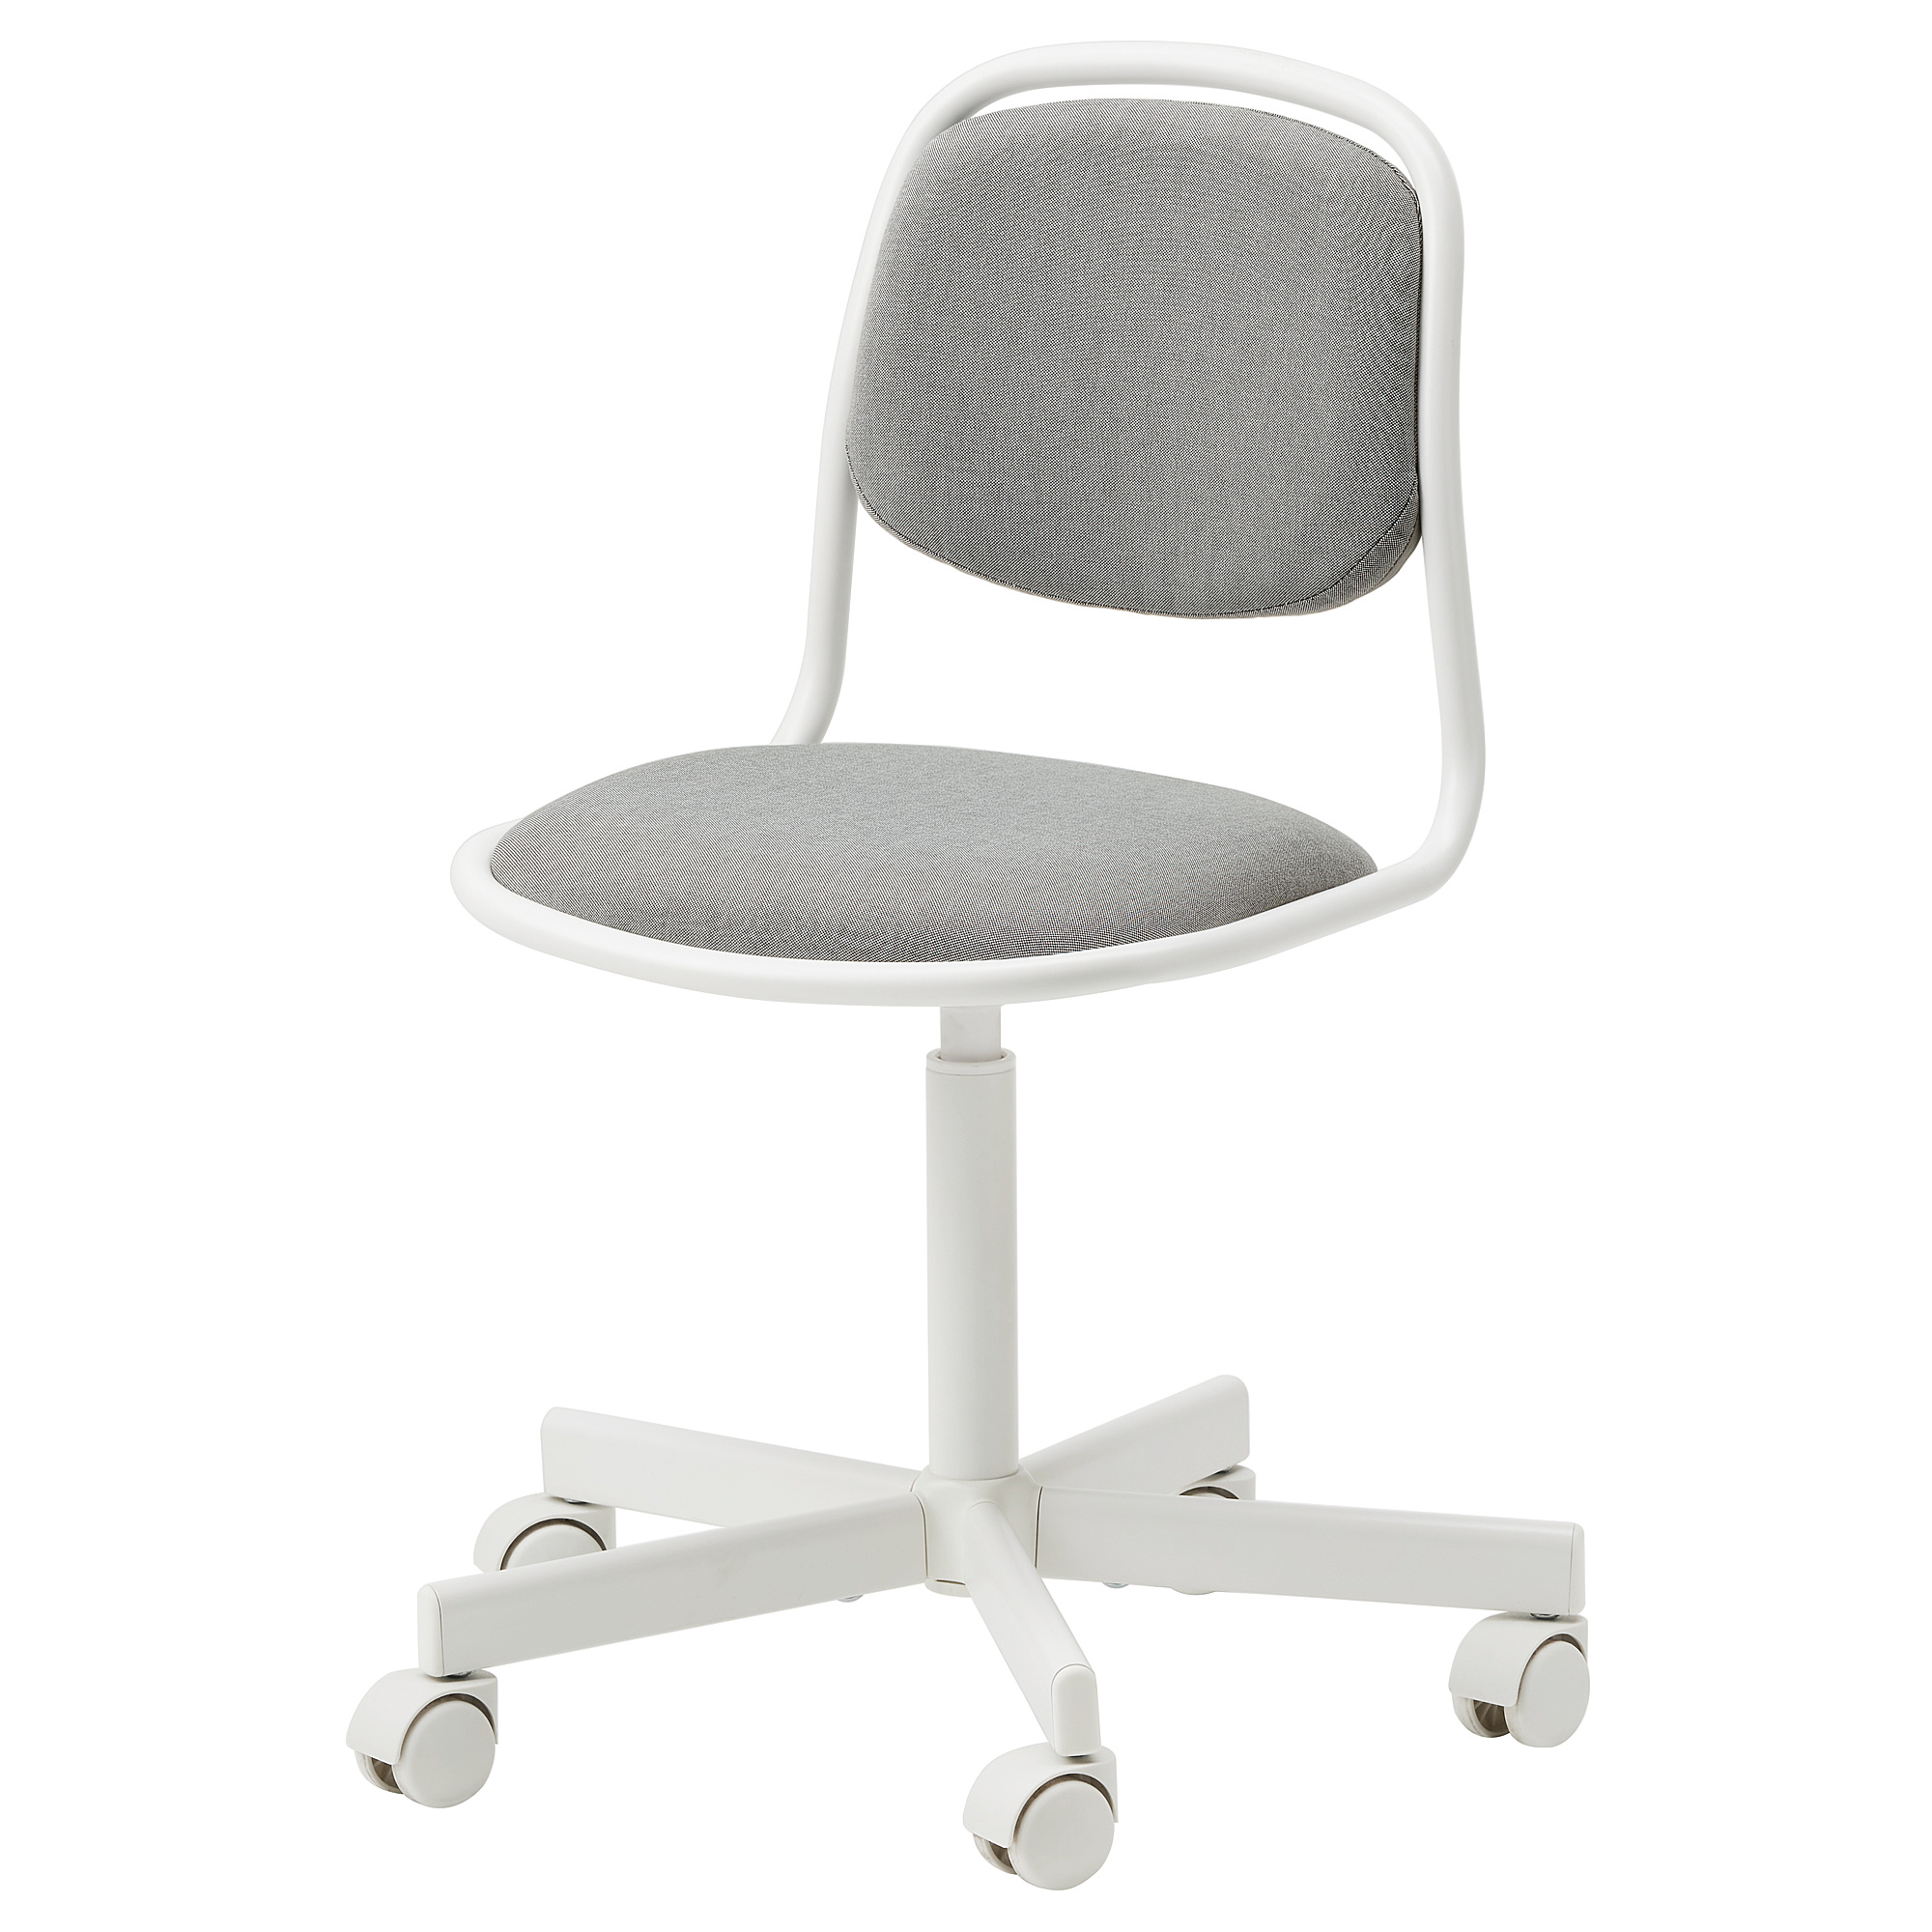 ÖRFJÄLL children's desk chair